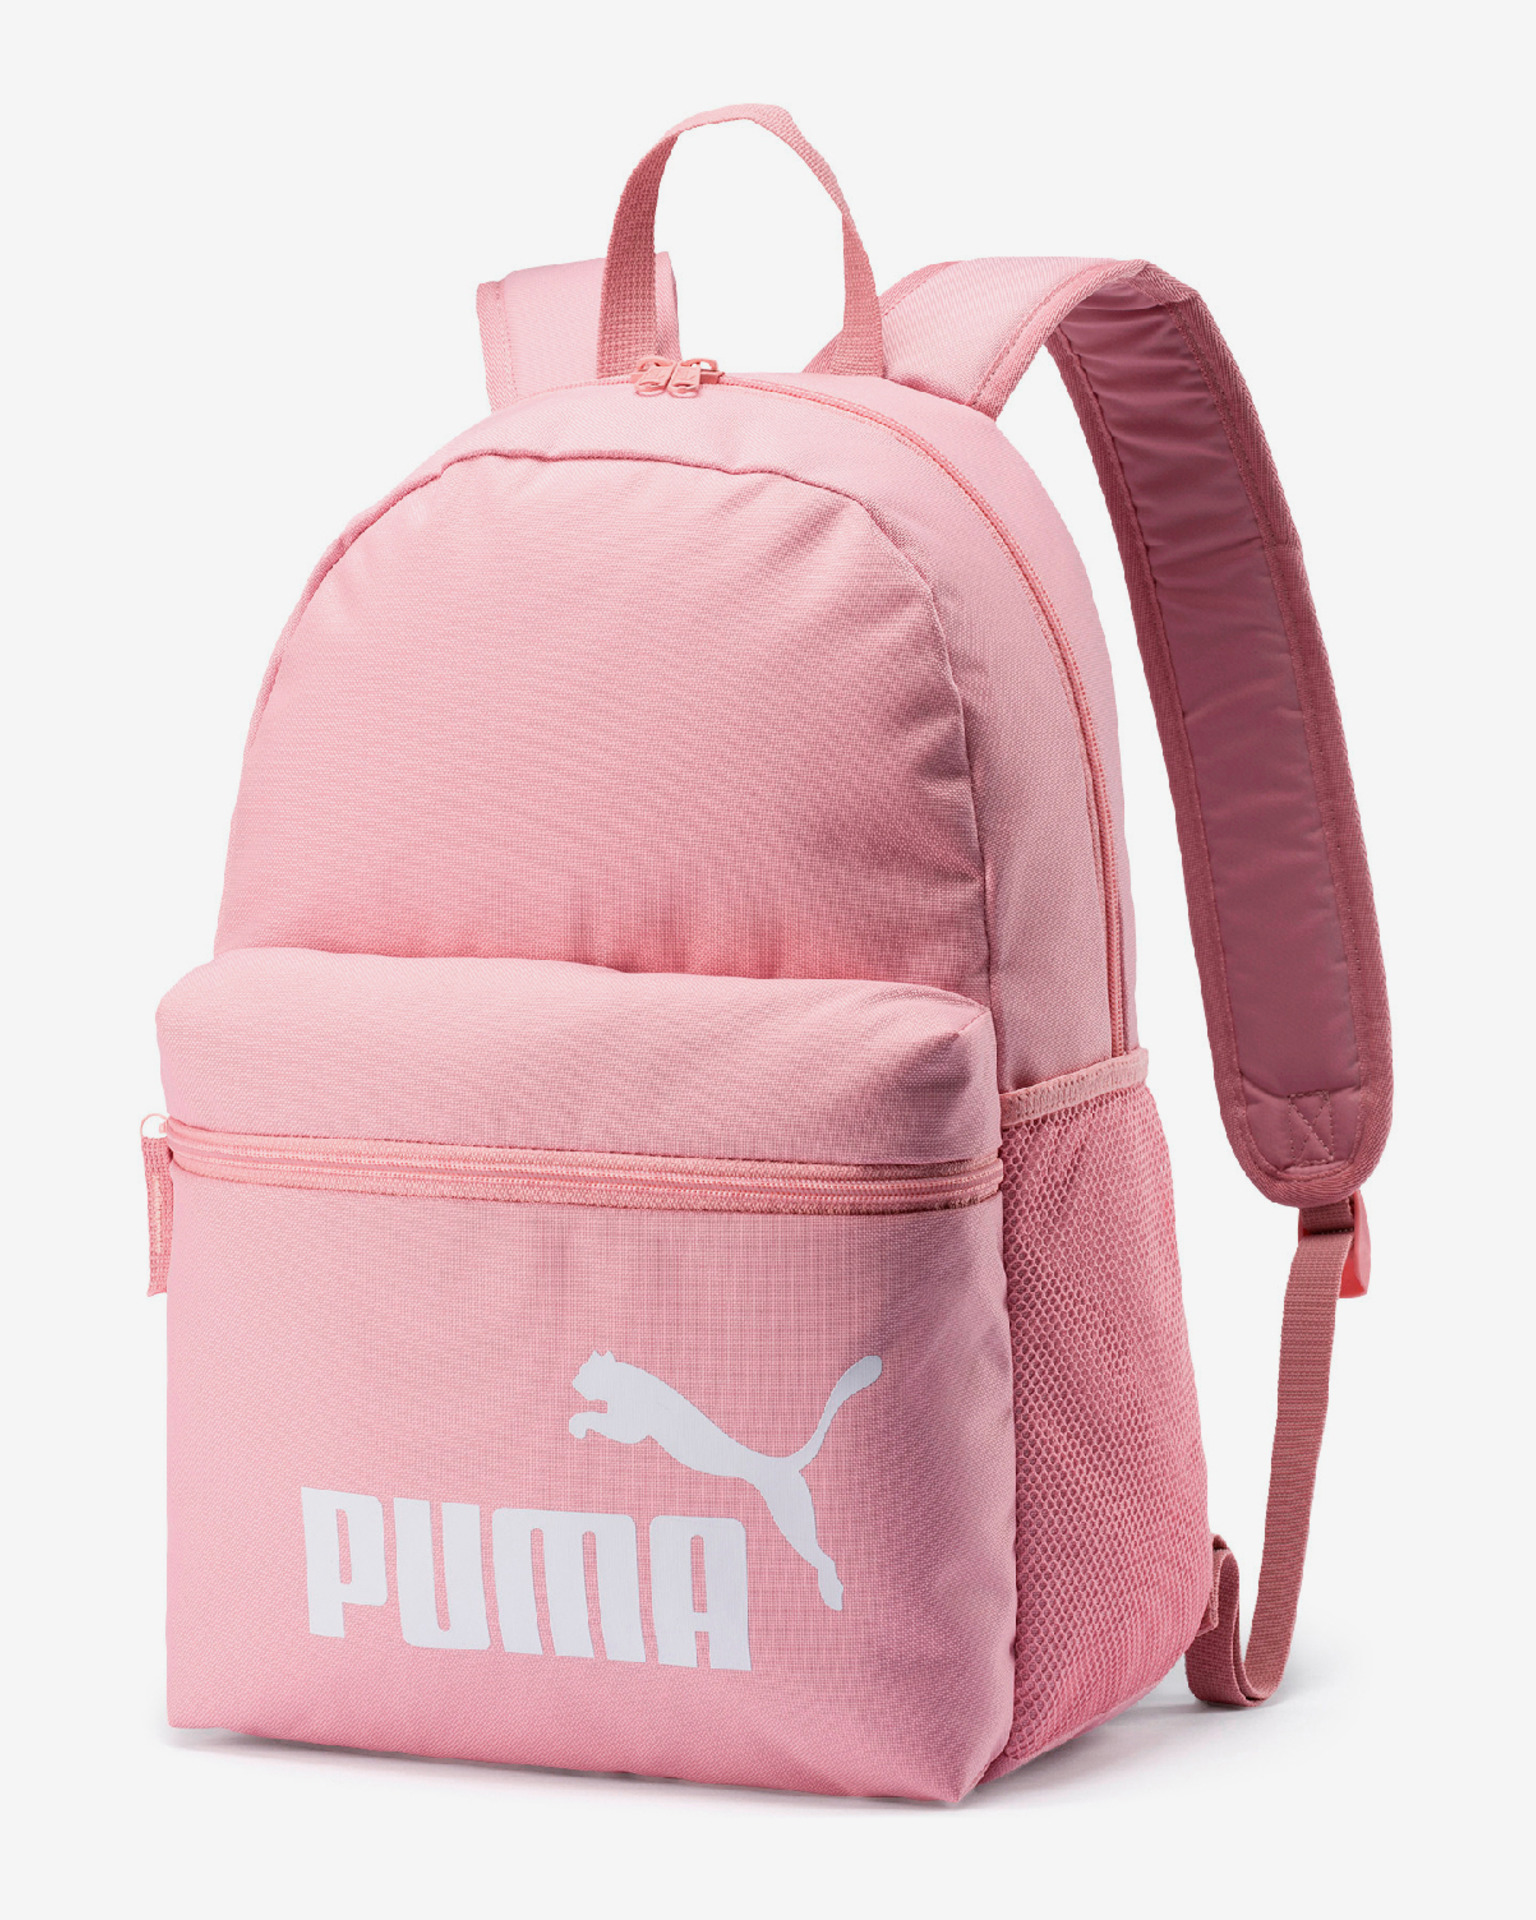 regelmatig afstand Klassiek Puma - Phase Backpack Bibloo.com